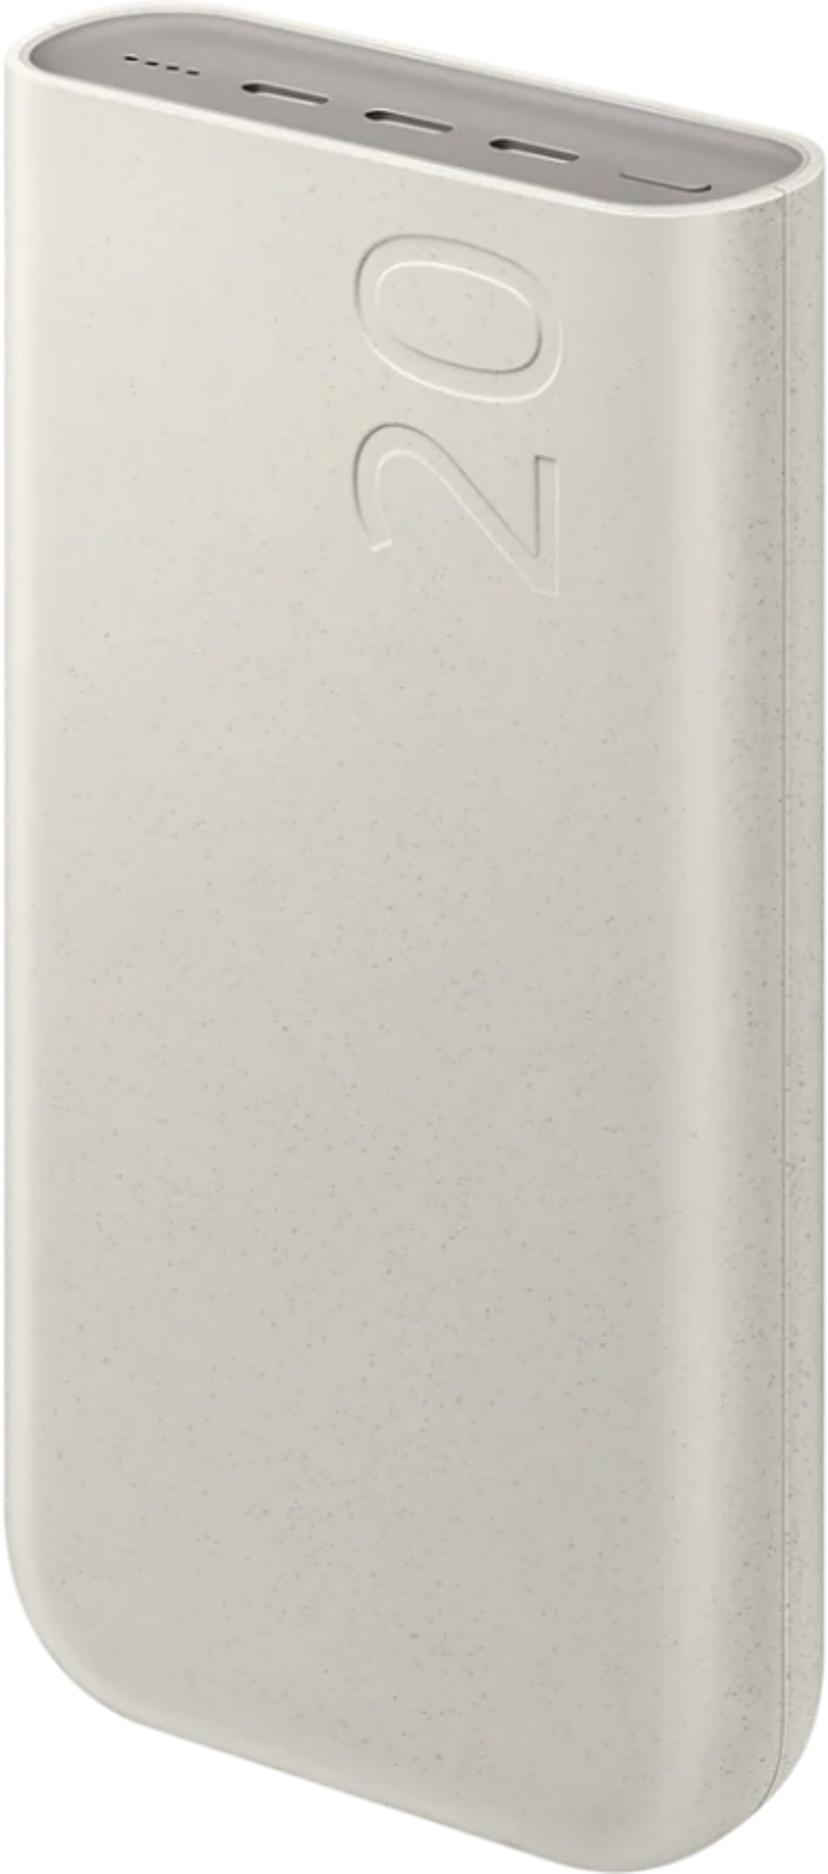 Samsung Portable Battery Pack 20000mAh